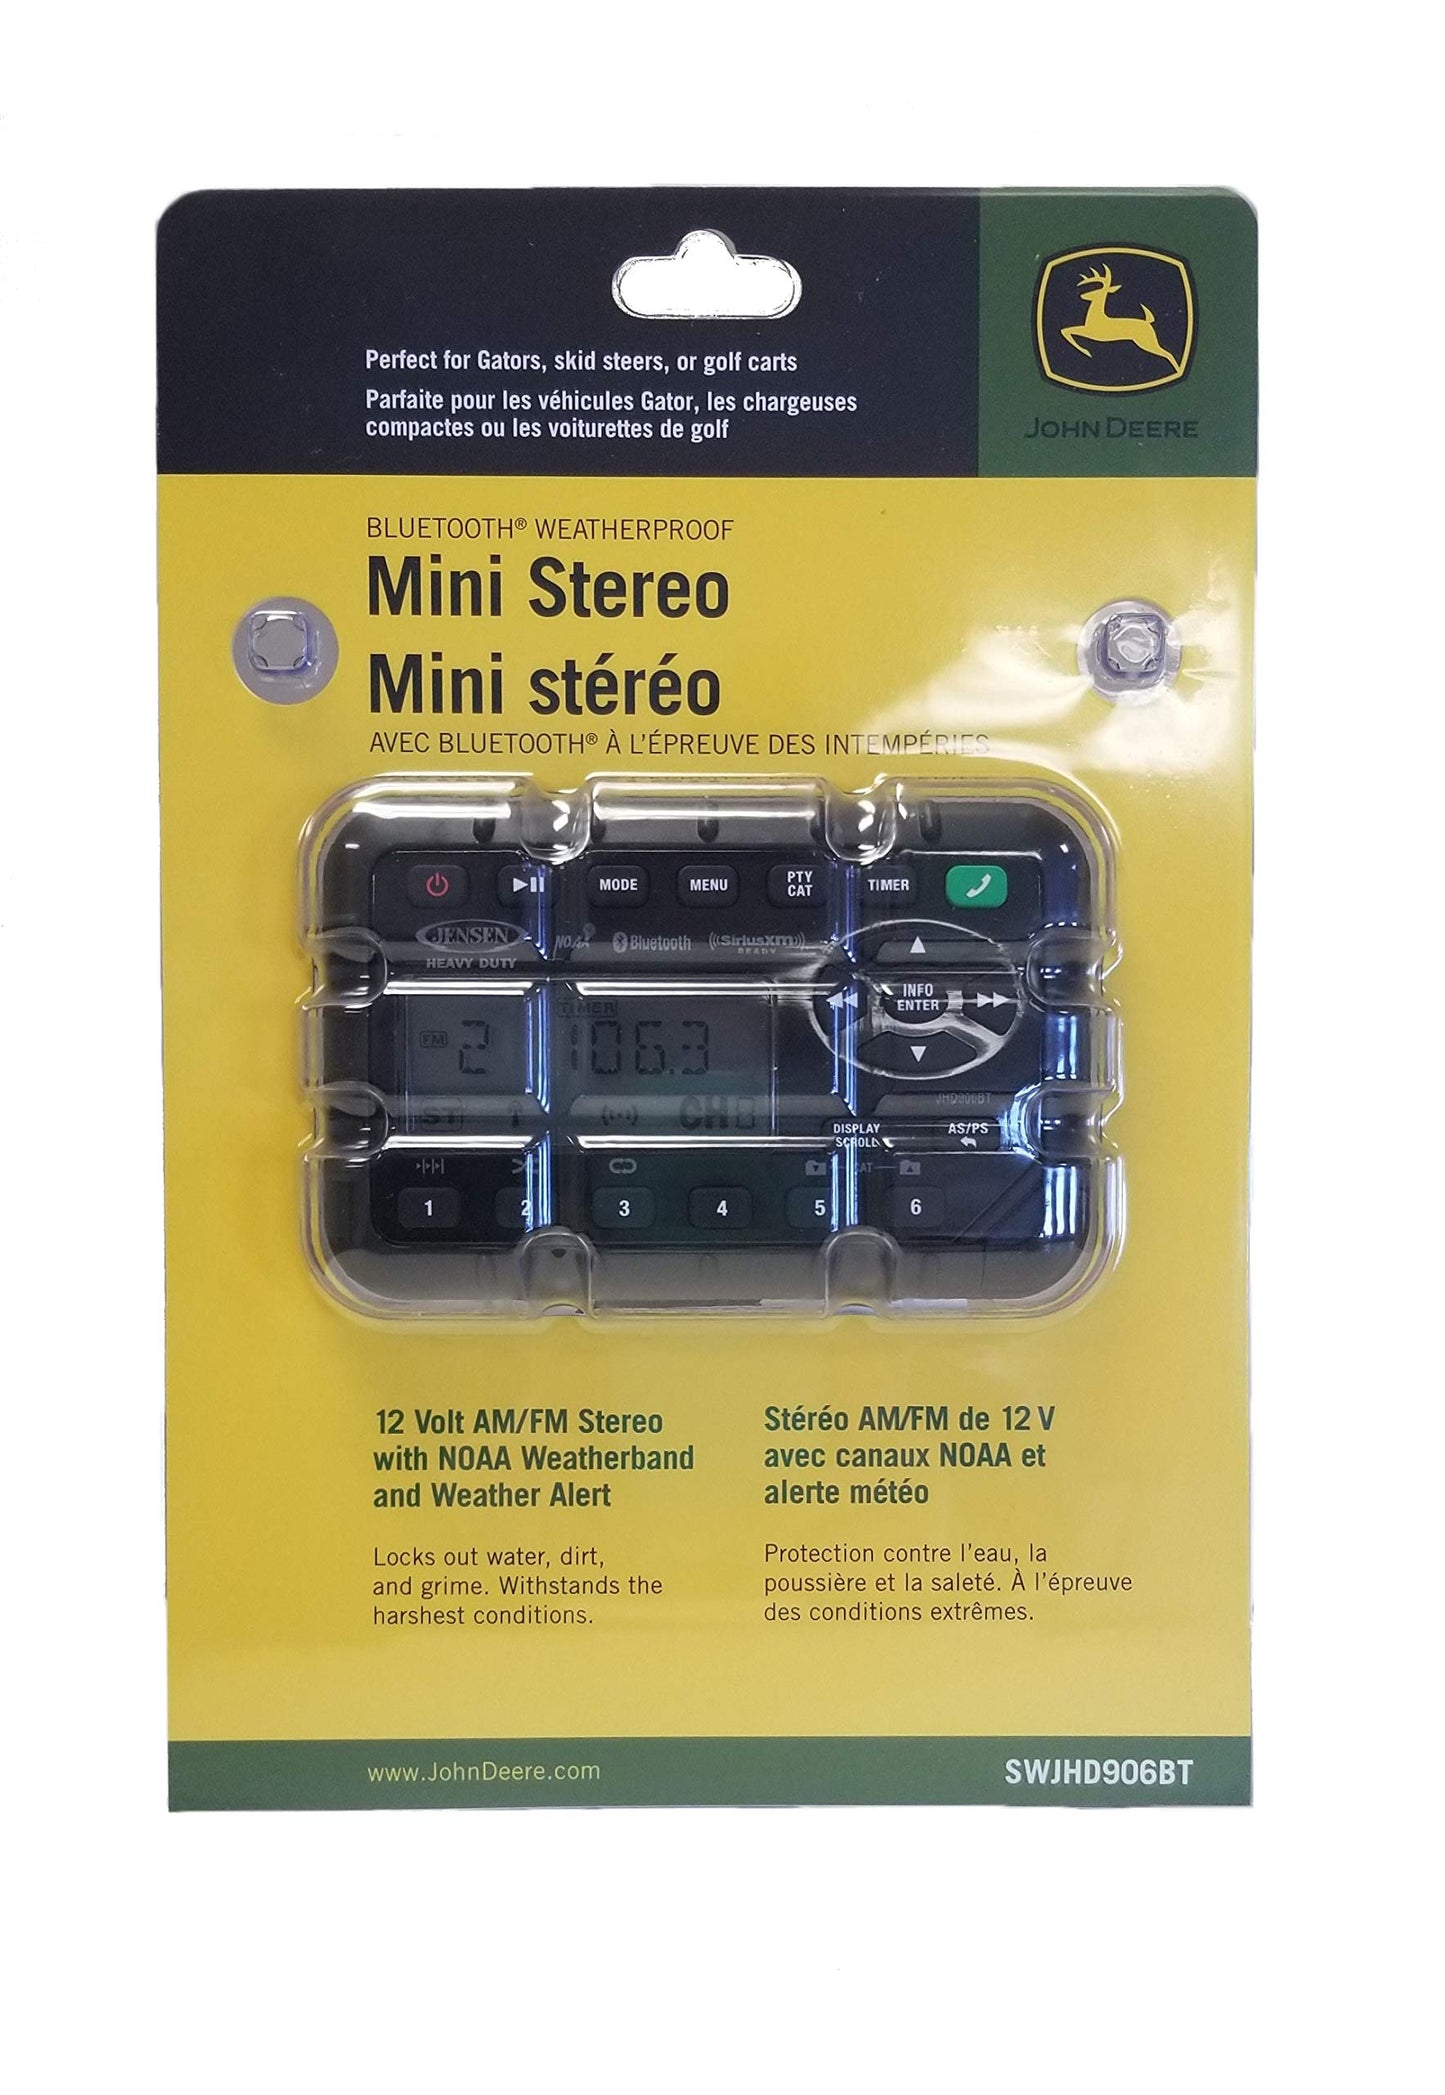 Jensen John Deere 12 Volt AM/FM Mini Stereo - SWJHD906BT